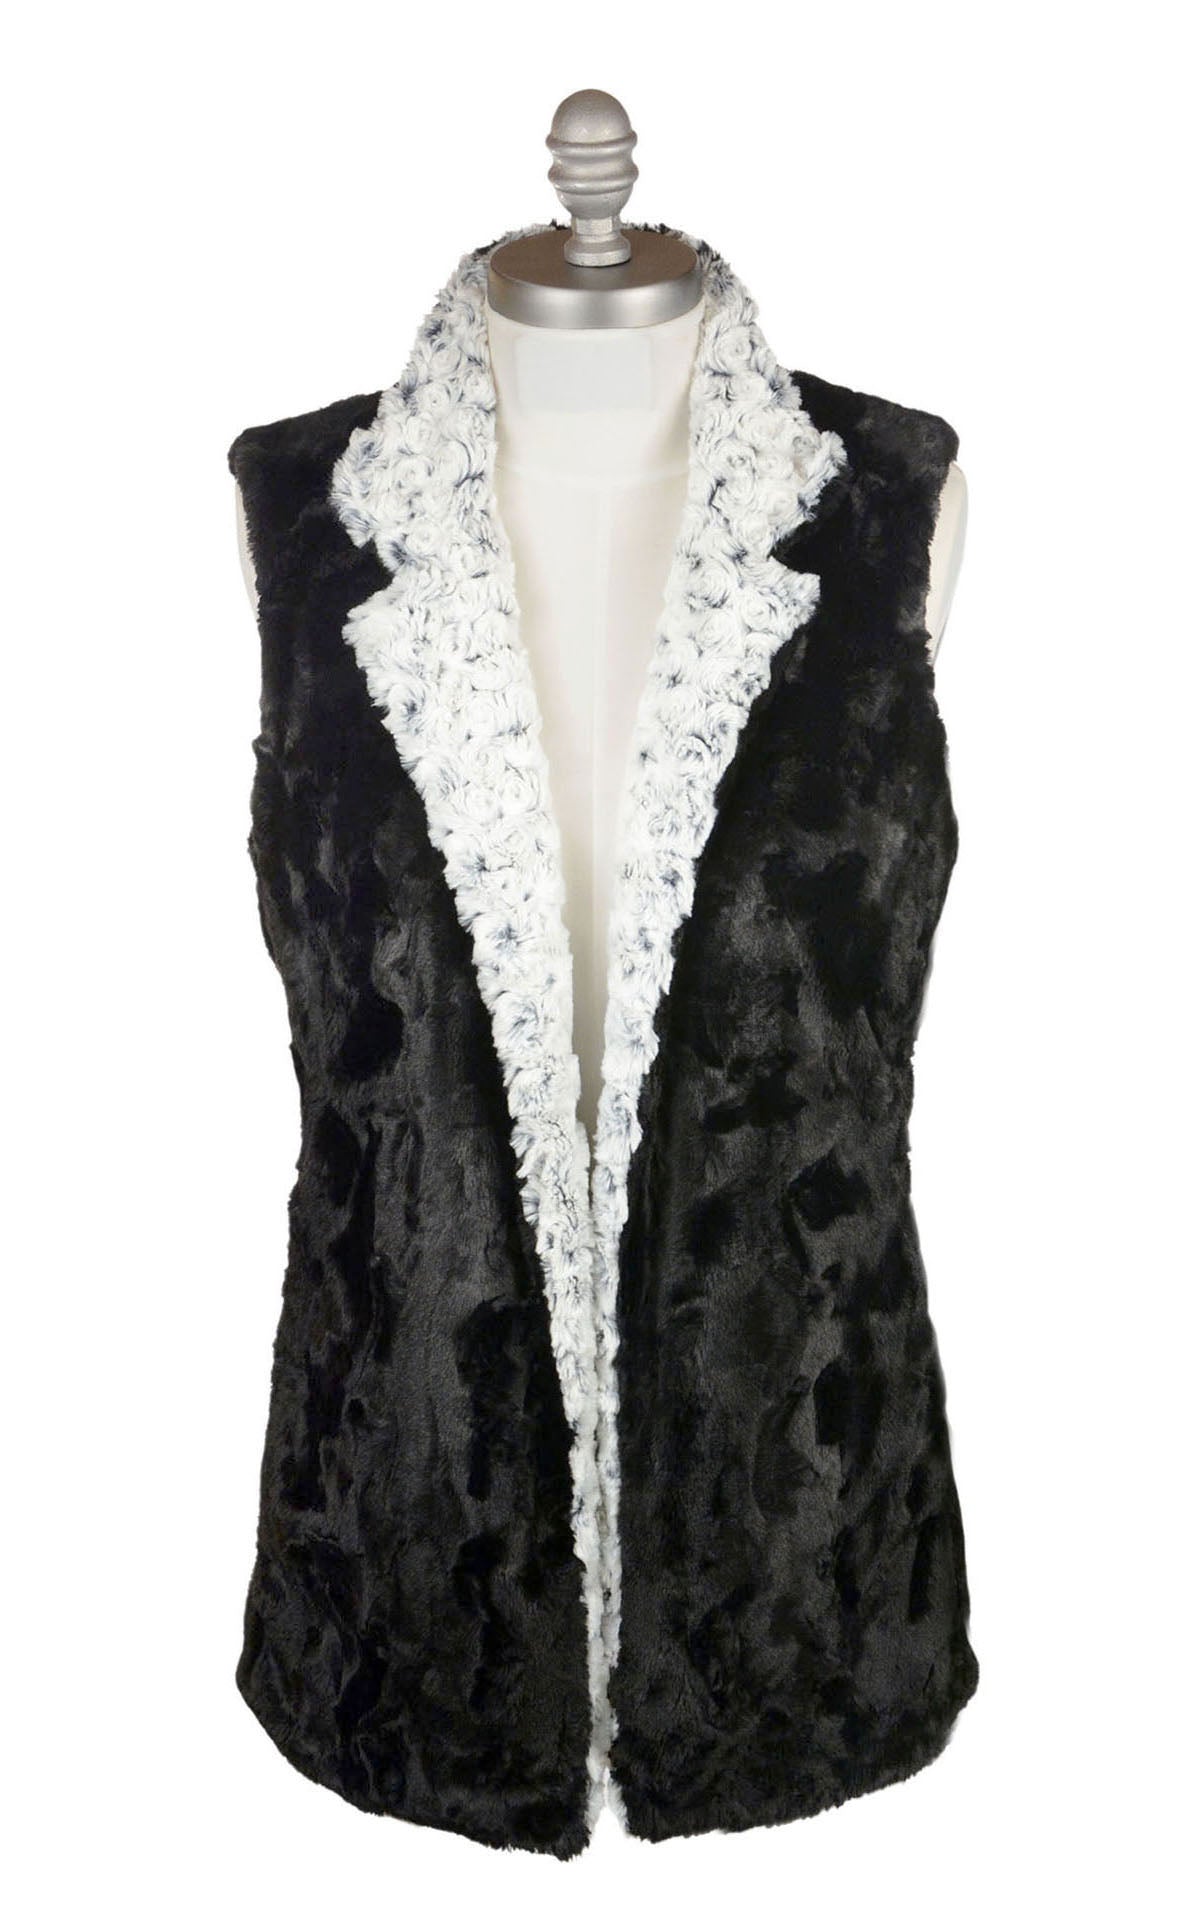 Mandarin Vest Short - Rosebud Faux Fur in Black lined Cuddly Black - Handmade in USA by Pandemonium Seattle